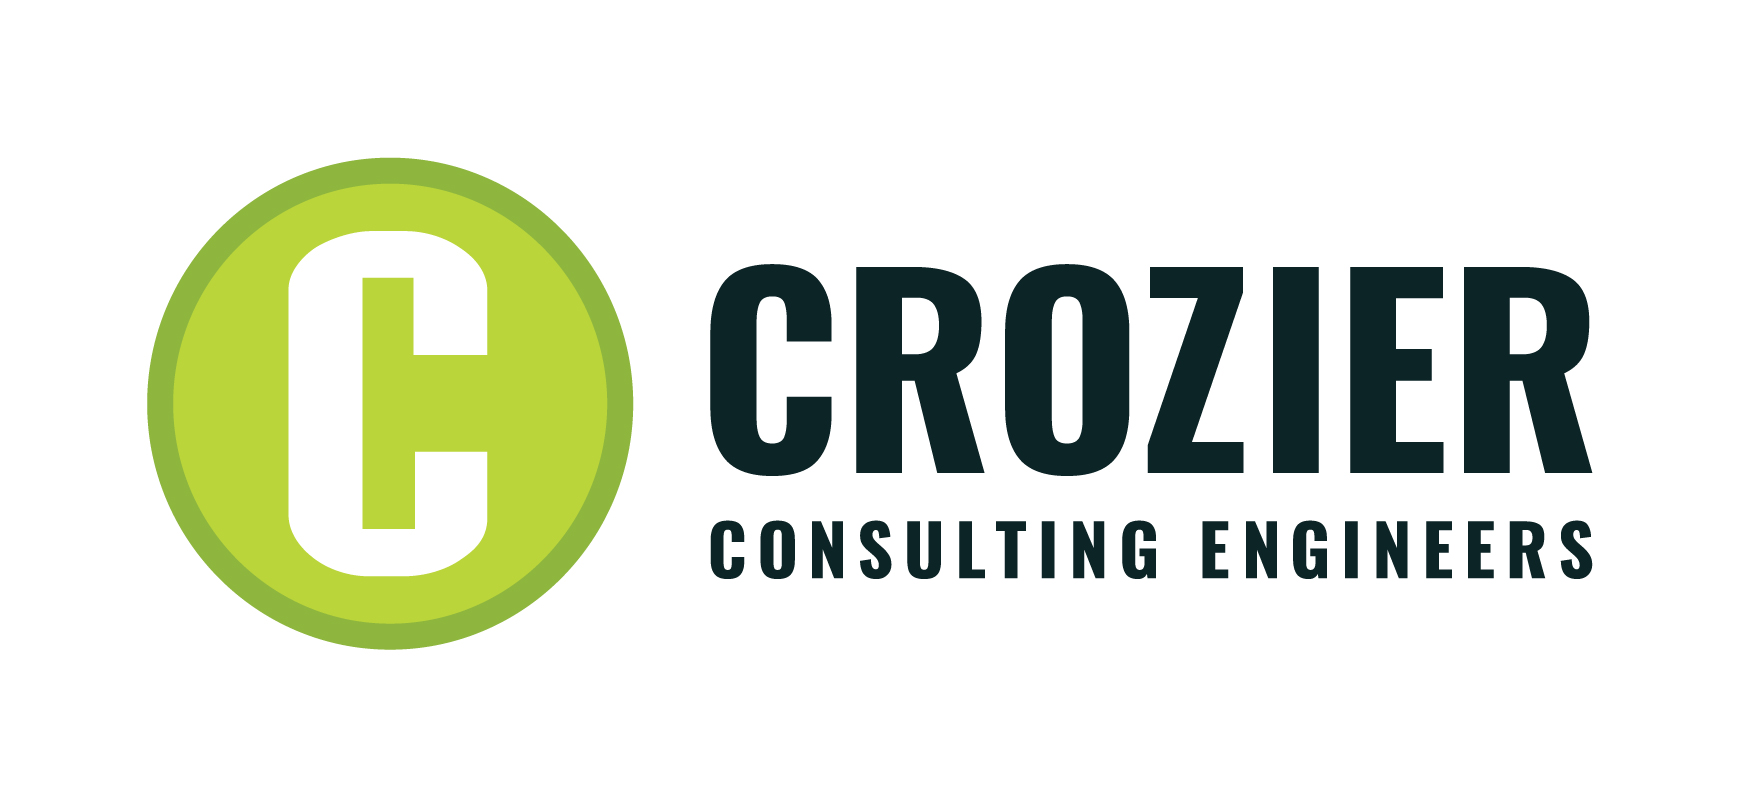 C.F. Crozier & Associates Inc.